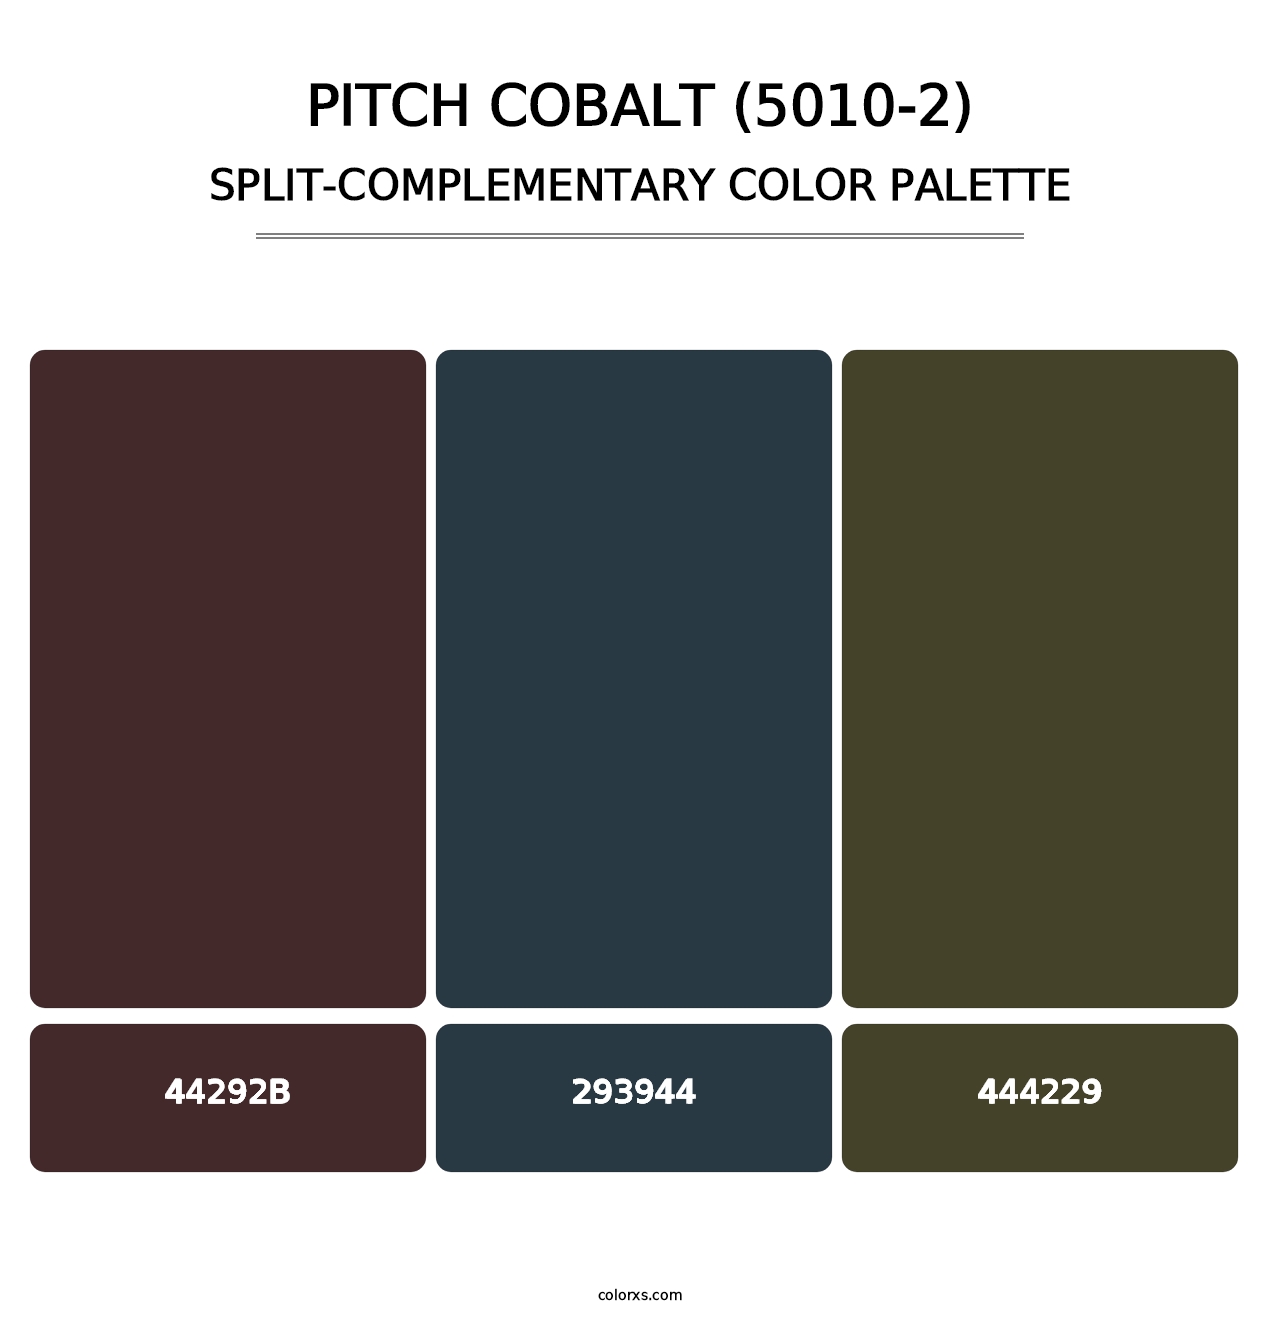 Pitch Cobalt (5010-2) - Split-Complementary Color Palette